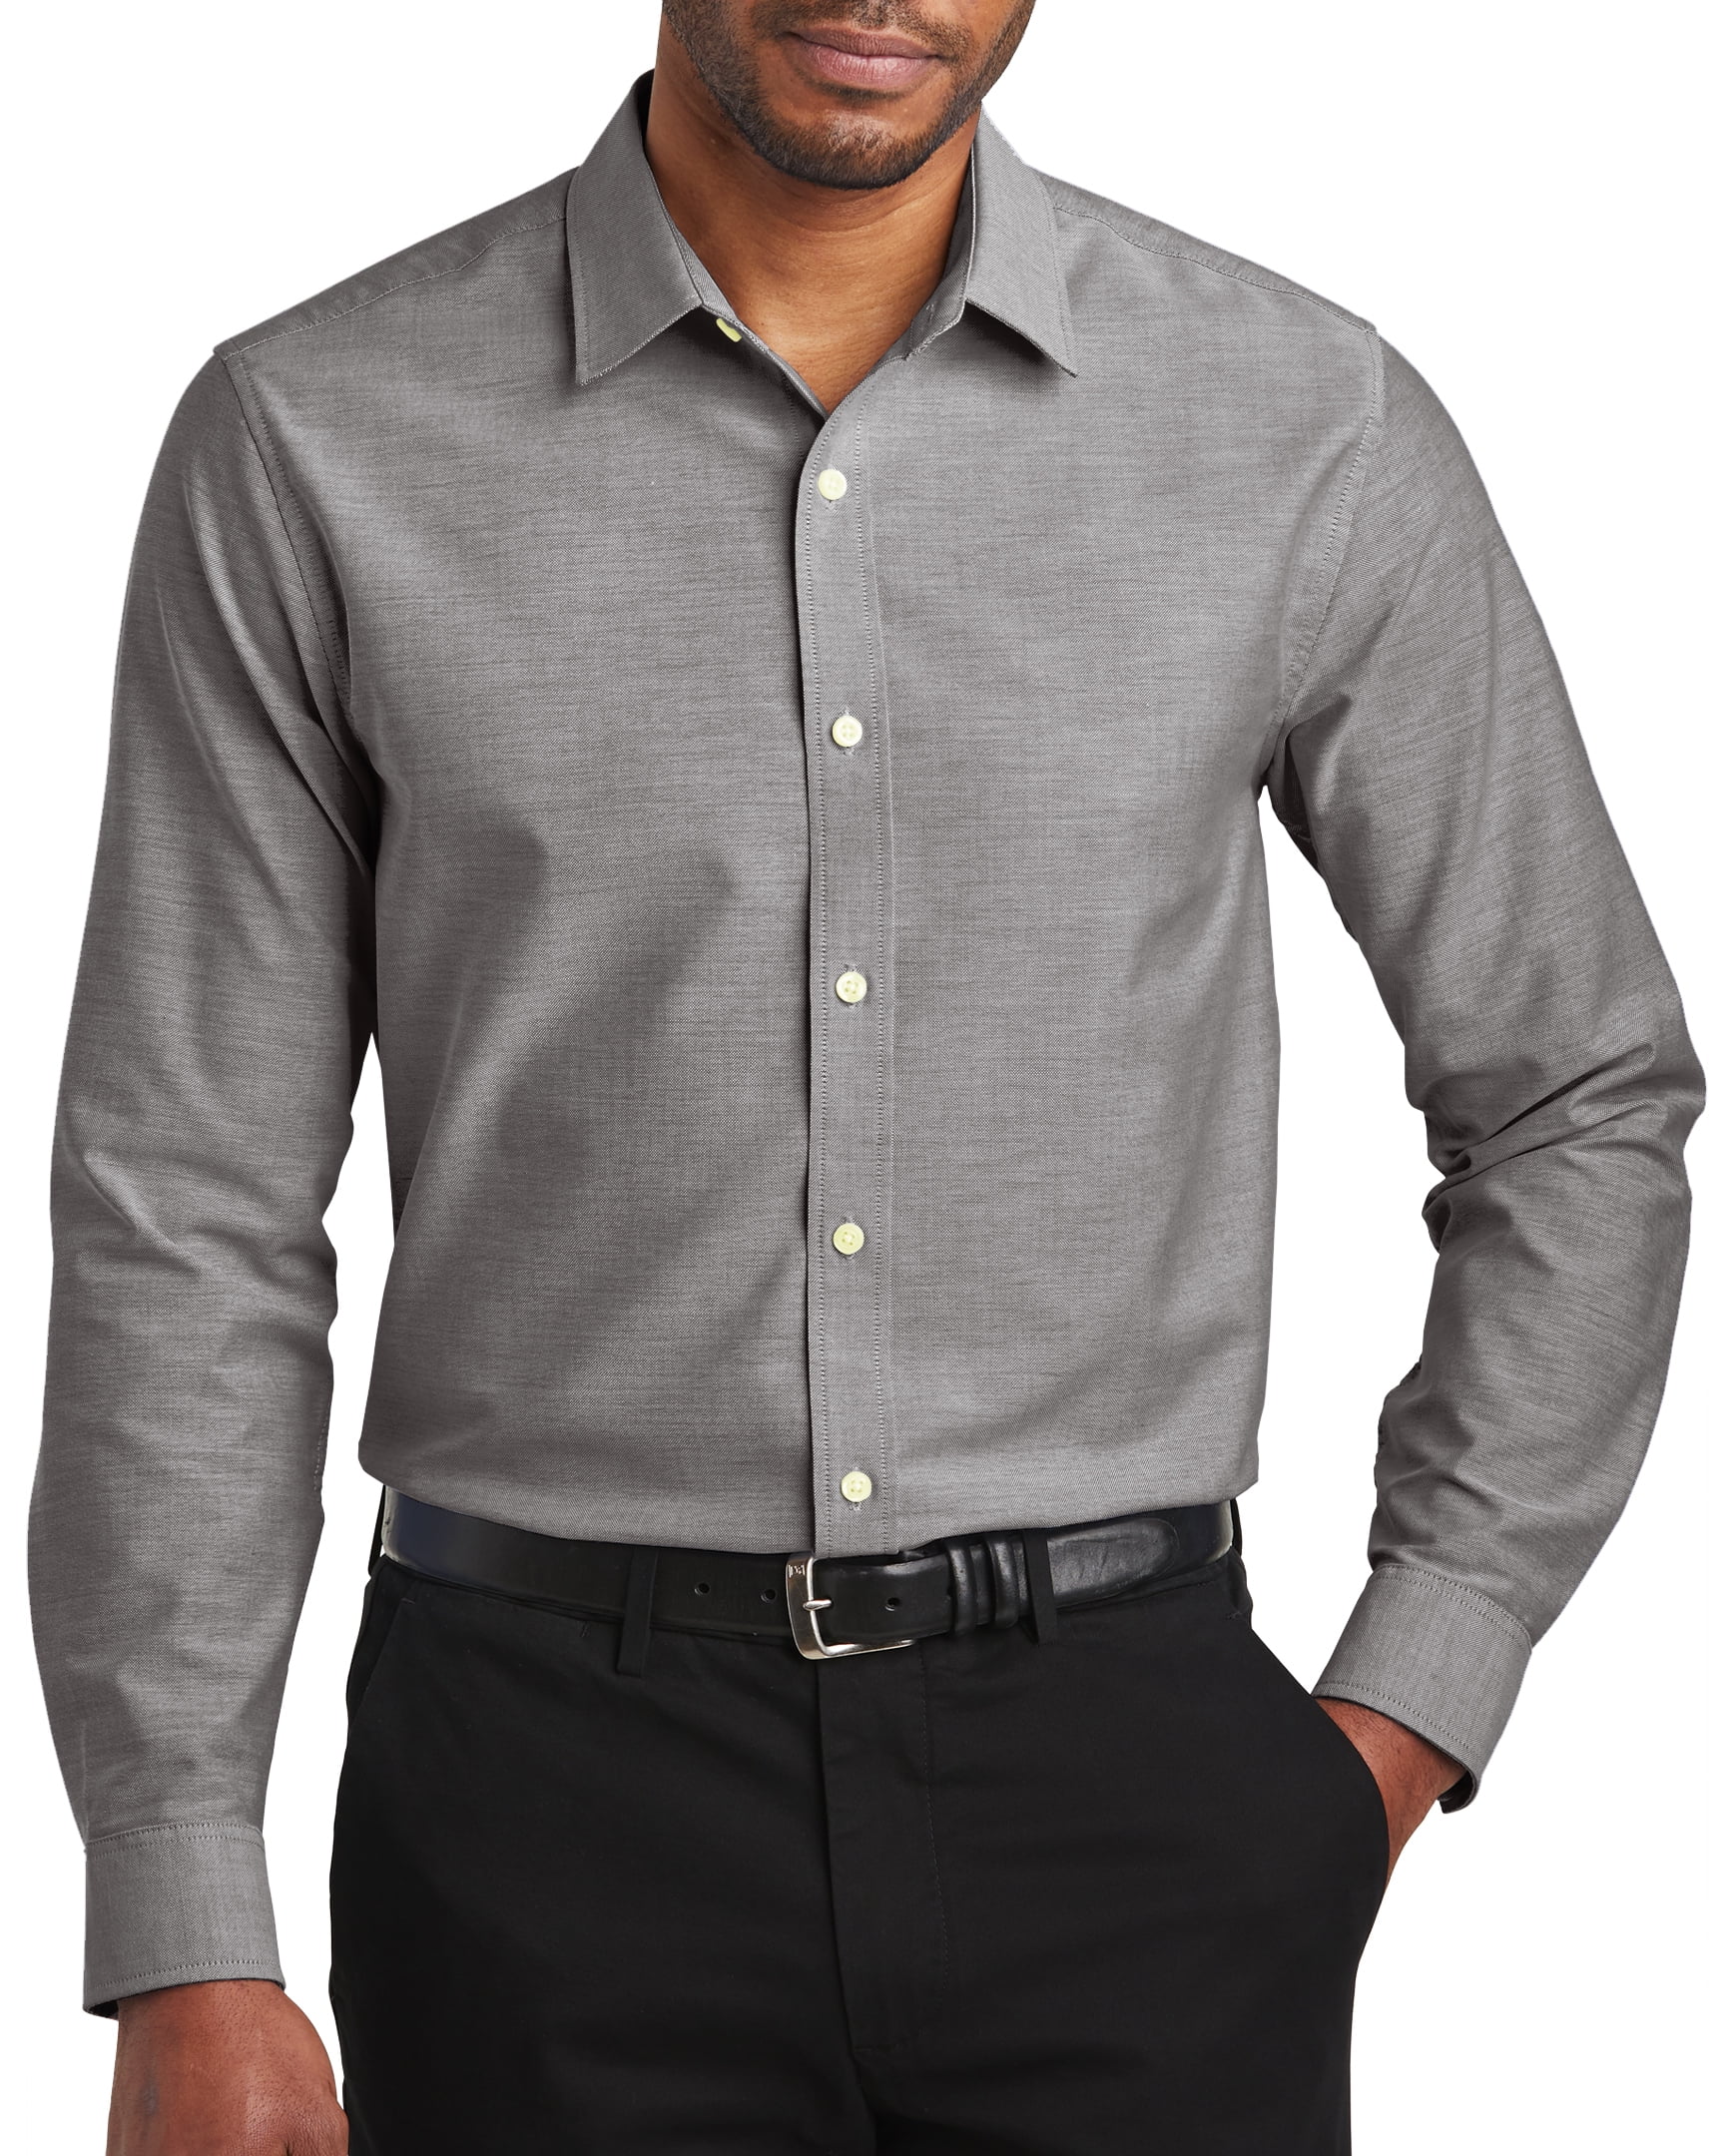 Mens Upscale Slim-Fit Oxford Dress Shirt - Black, 2XL - Walmart.com